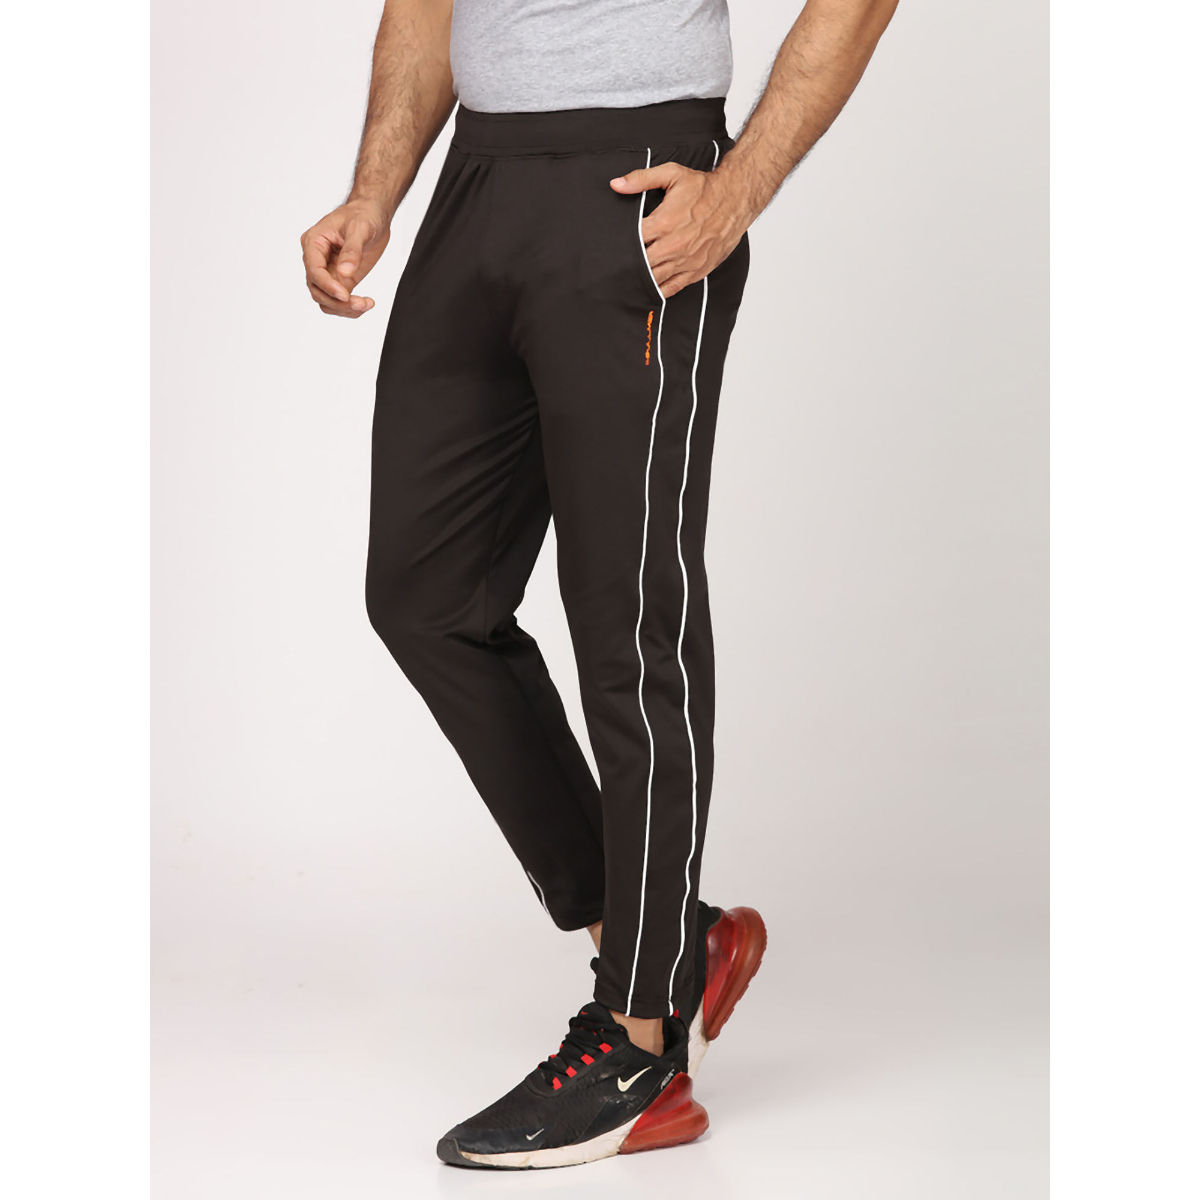 AVOLT Dry Fit Track Pant for Men I Slim Fit Athleisure Running Gym Str   WILDHORN